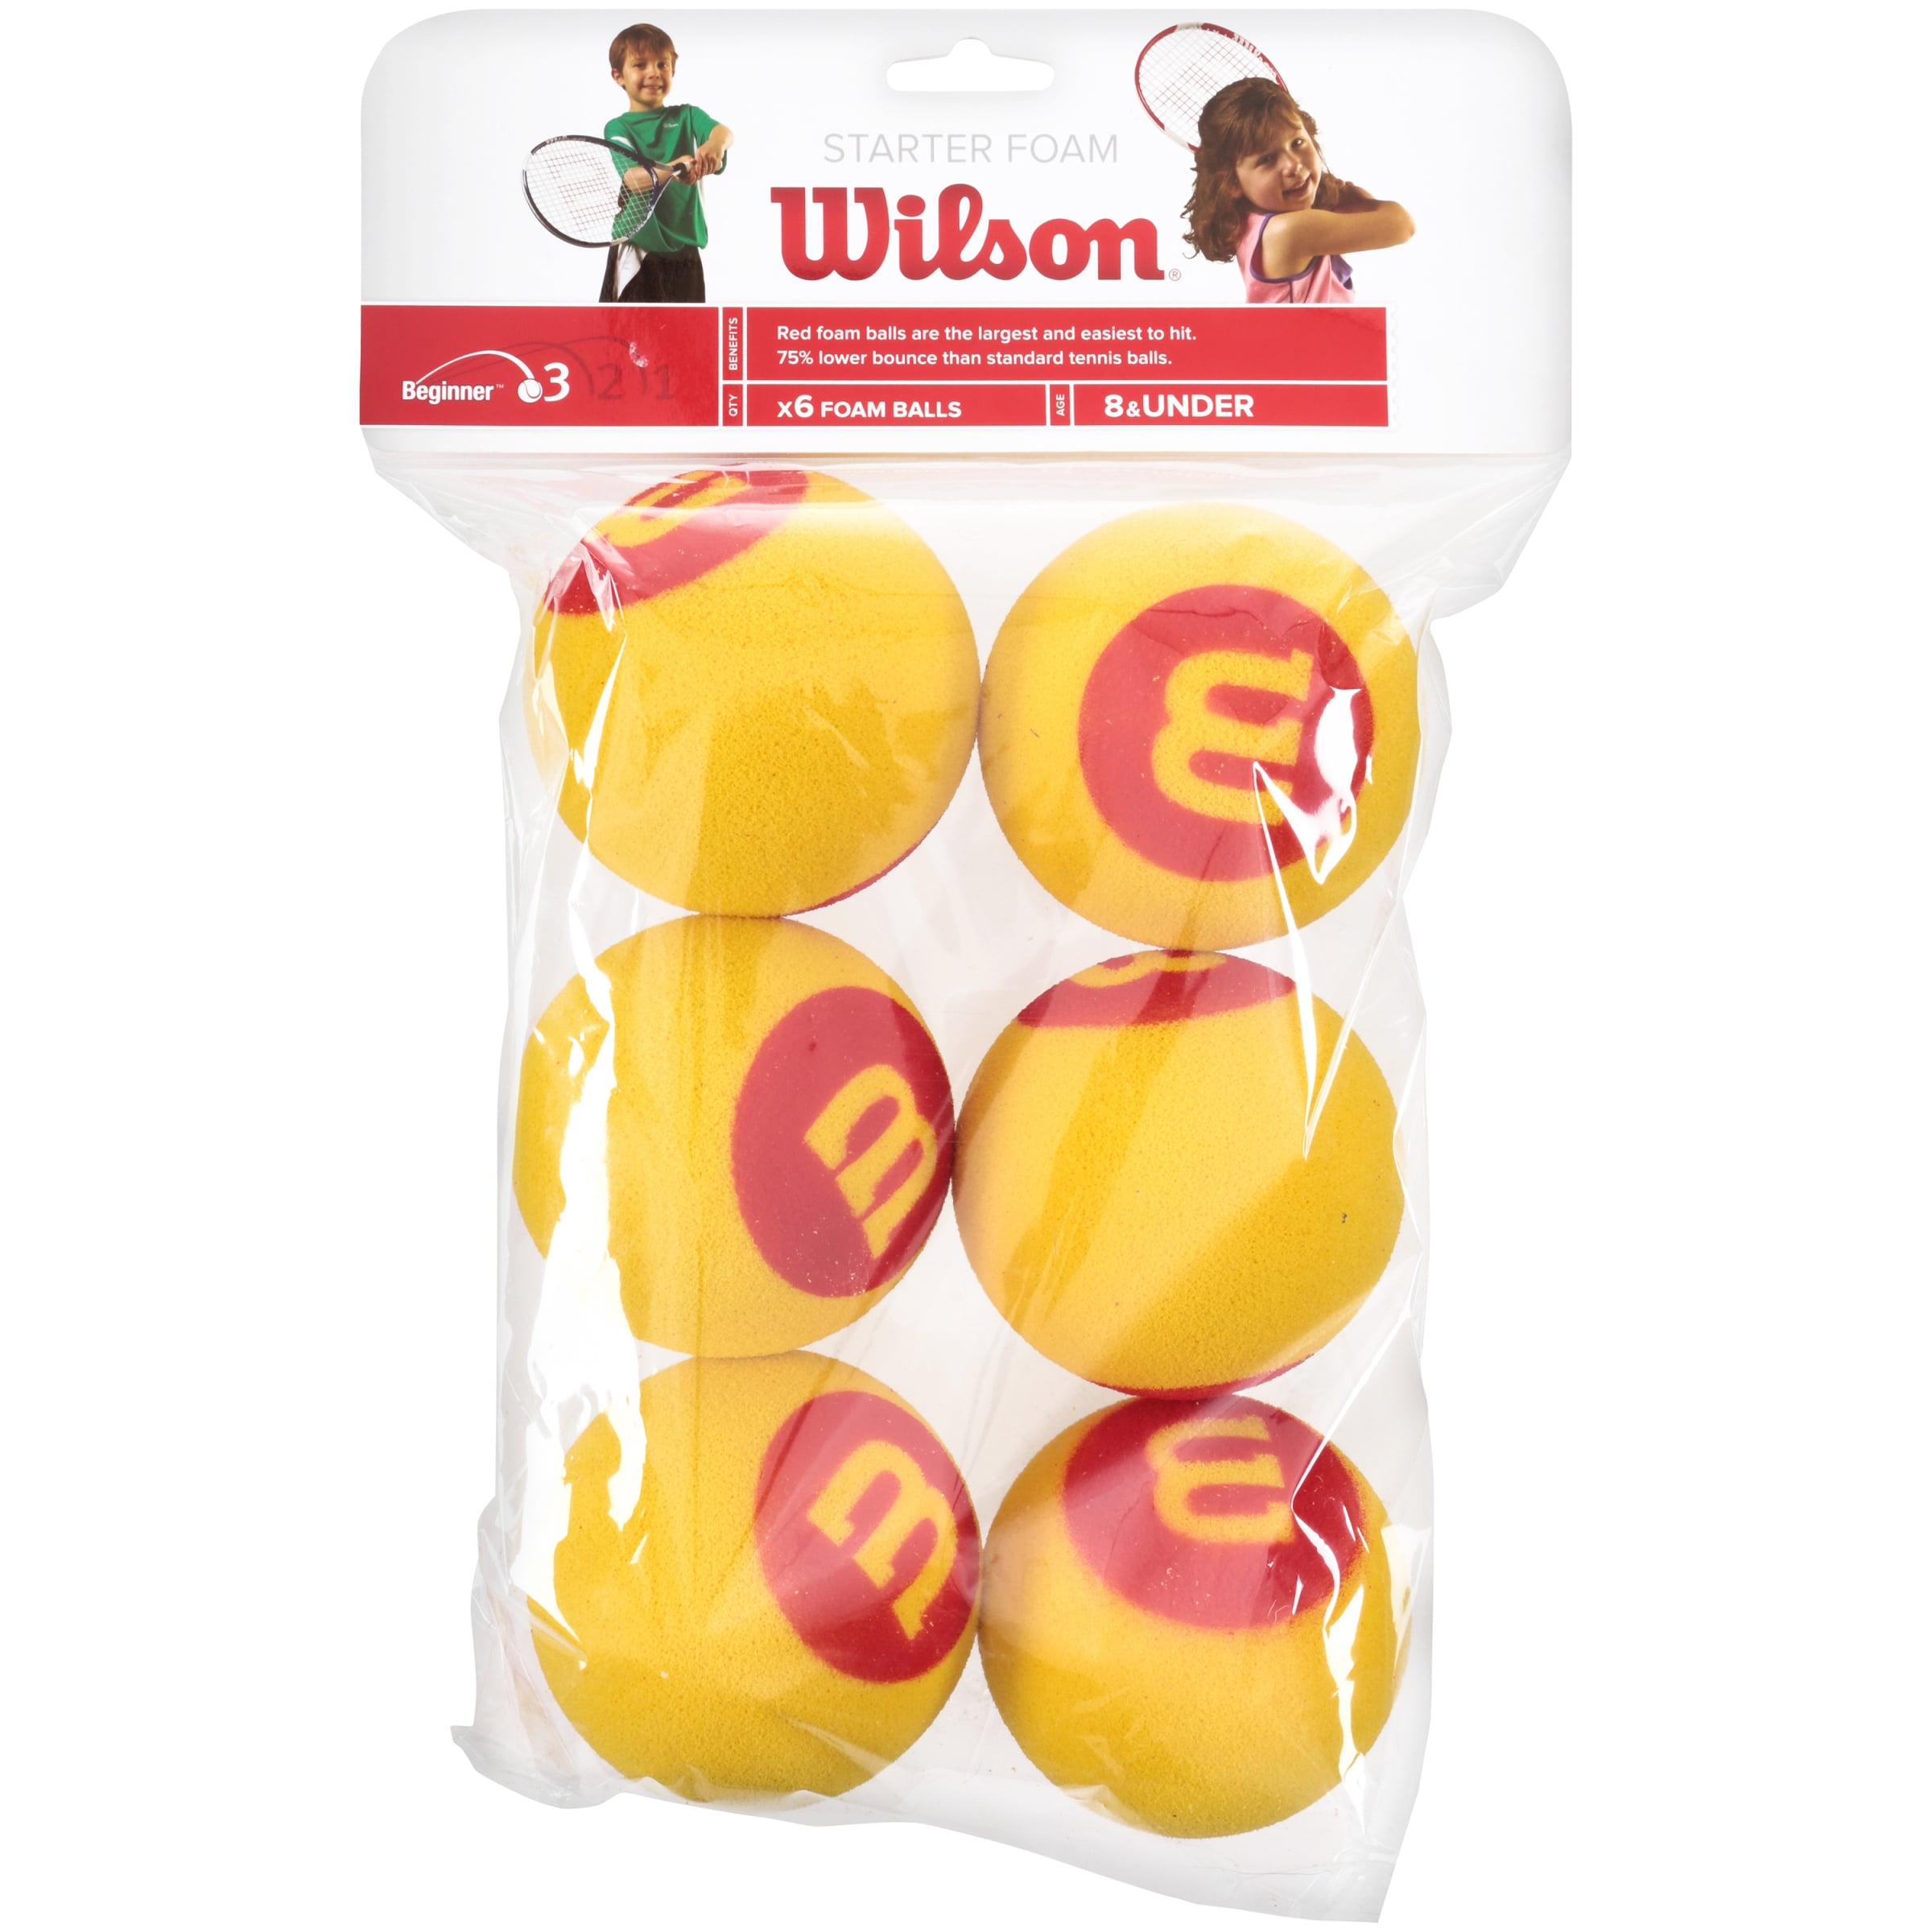 Pack of 6 Wilson Tennis Balls Yellow/Red for Children, Starter Foam 